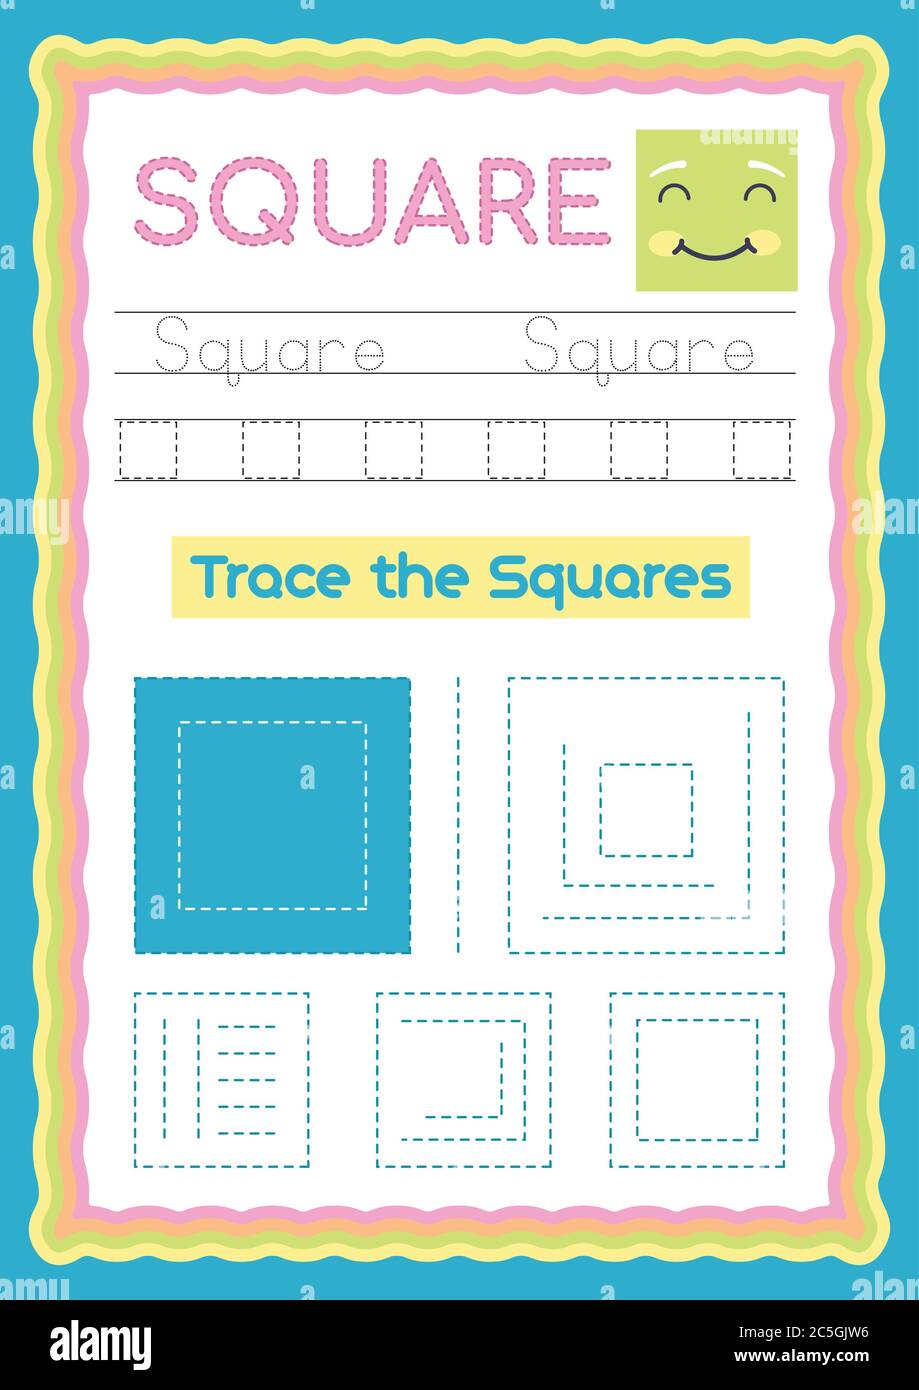 square-worksheets-for-preschool